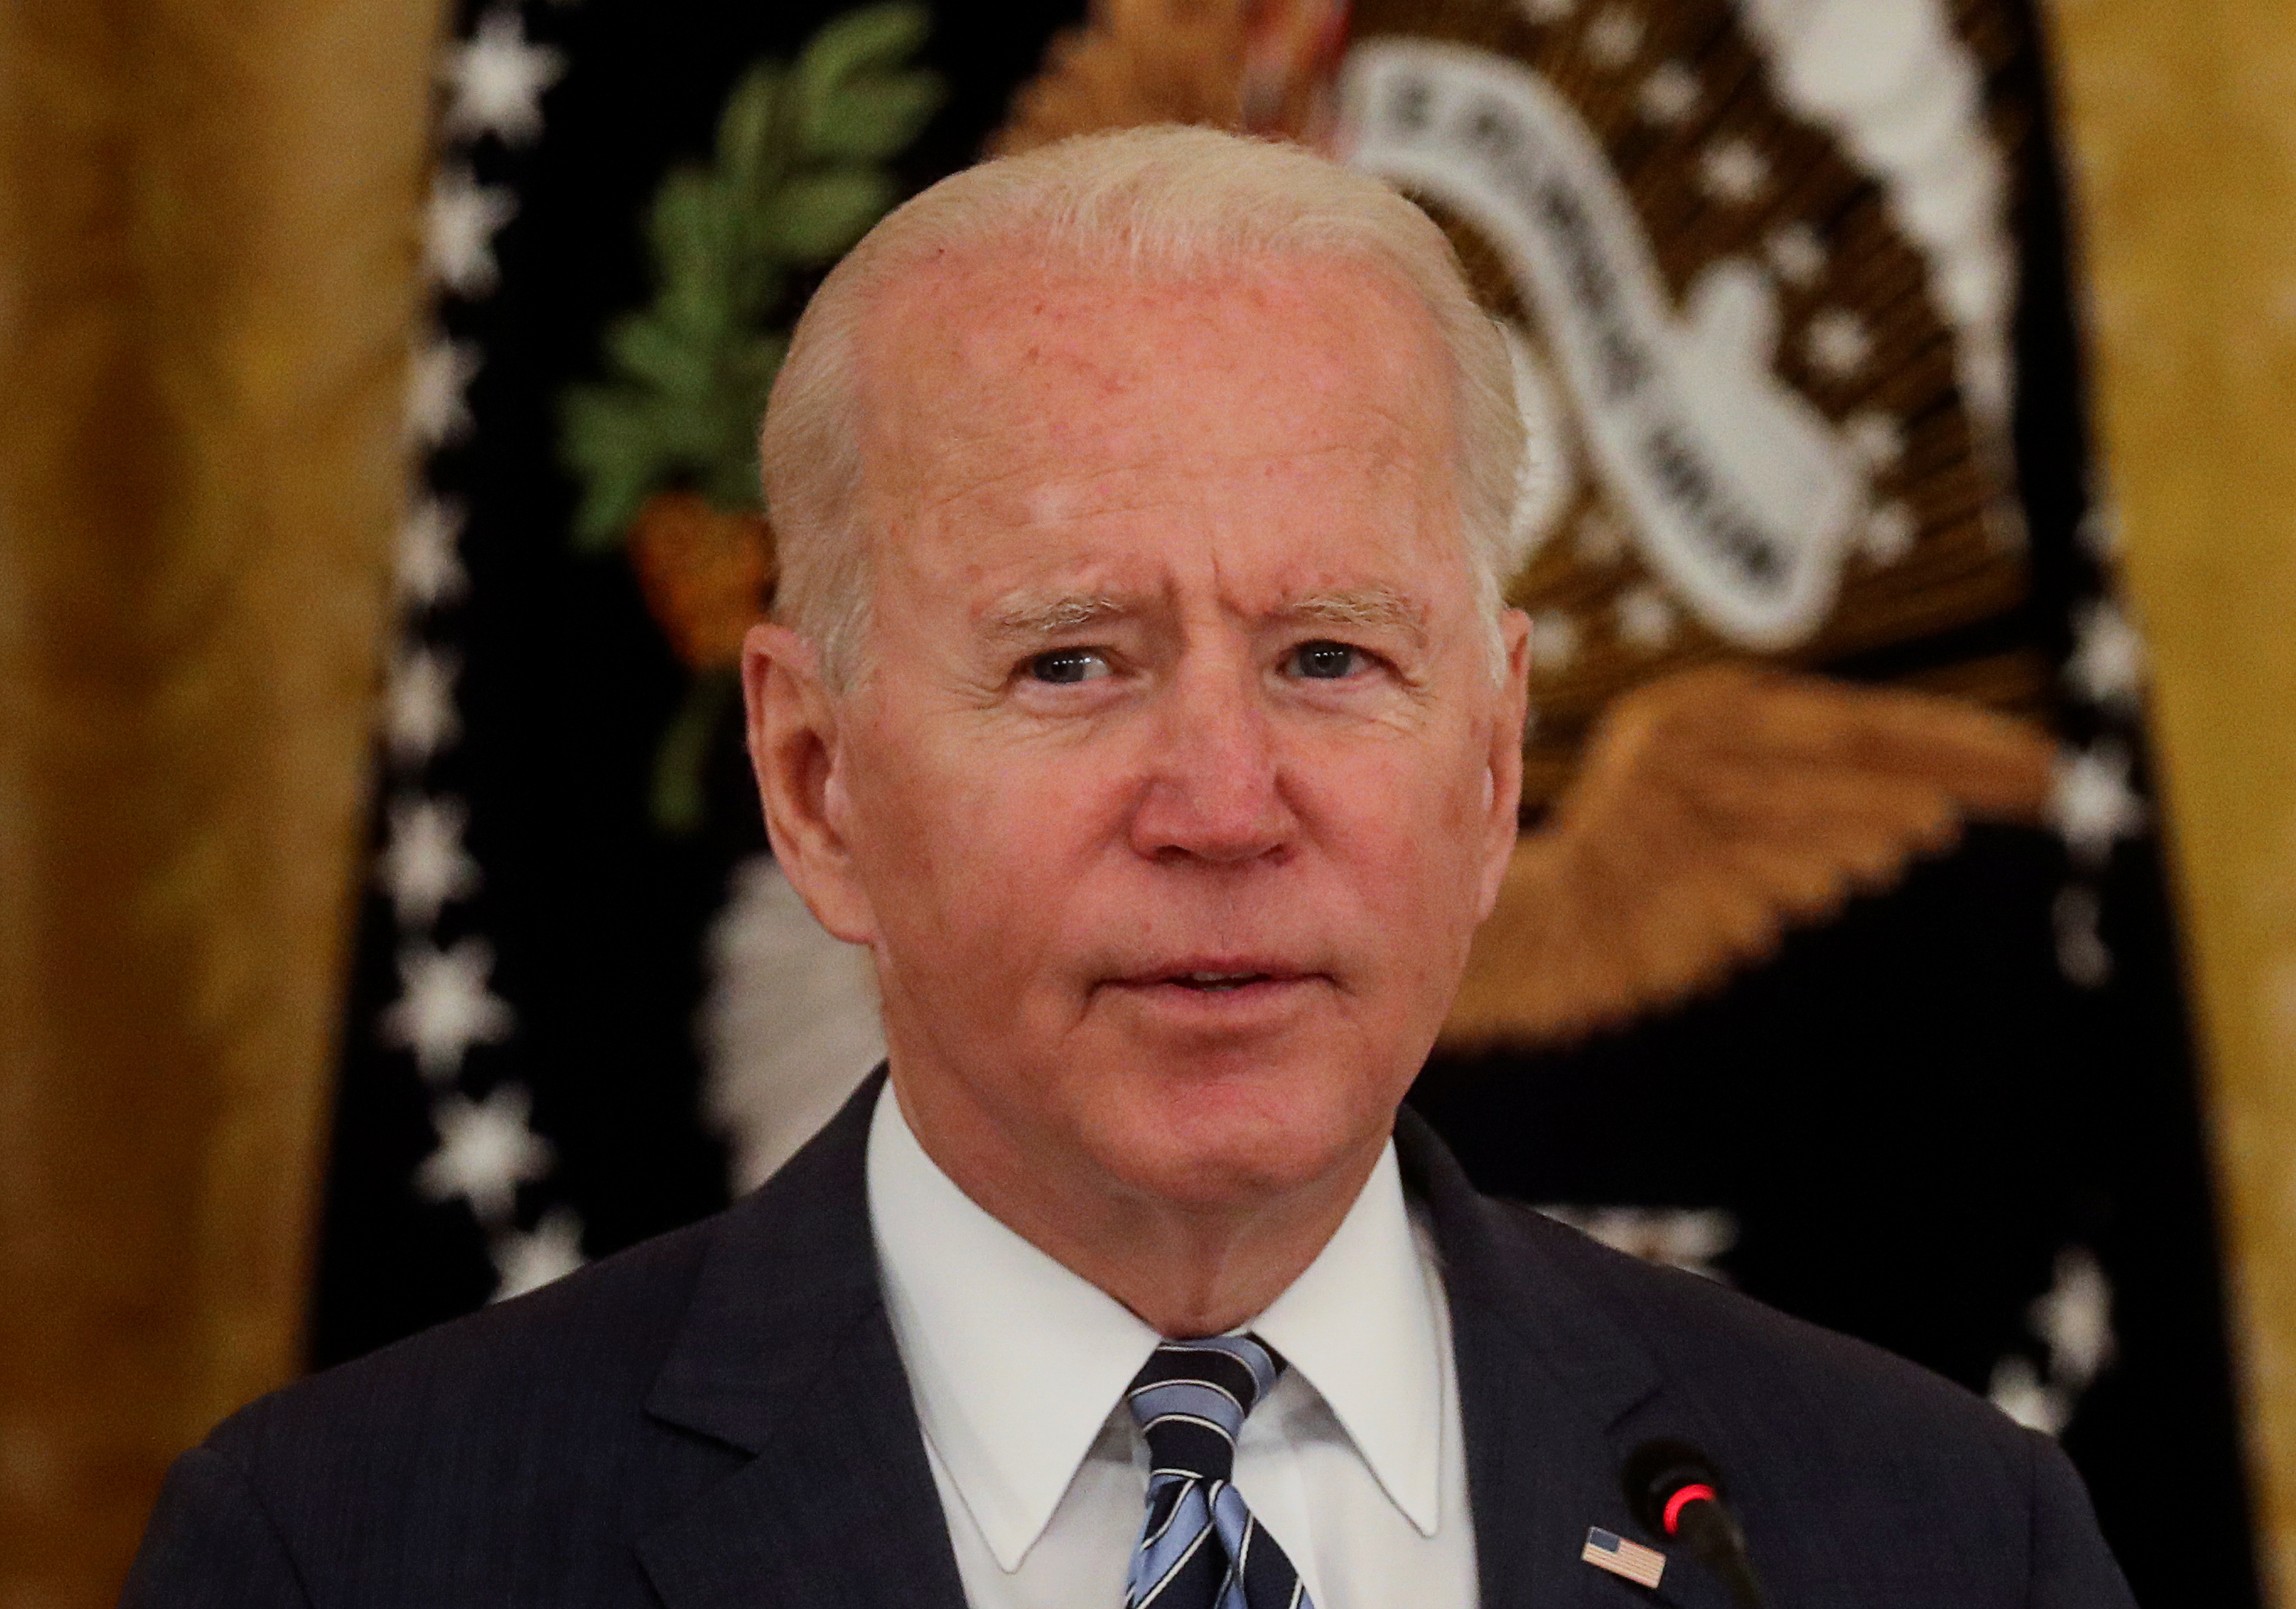 U.S. President Joe Biden holds meeting on improving U.S. cybersecurity at the White House in Washington